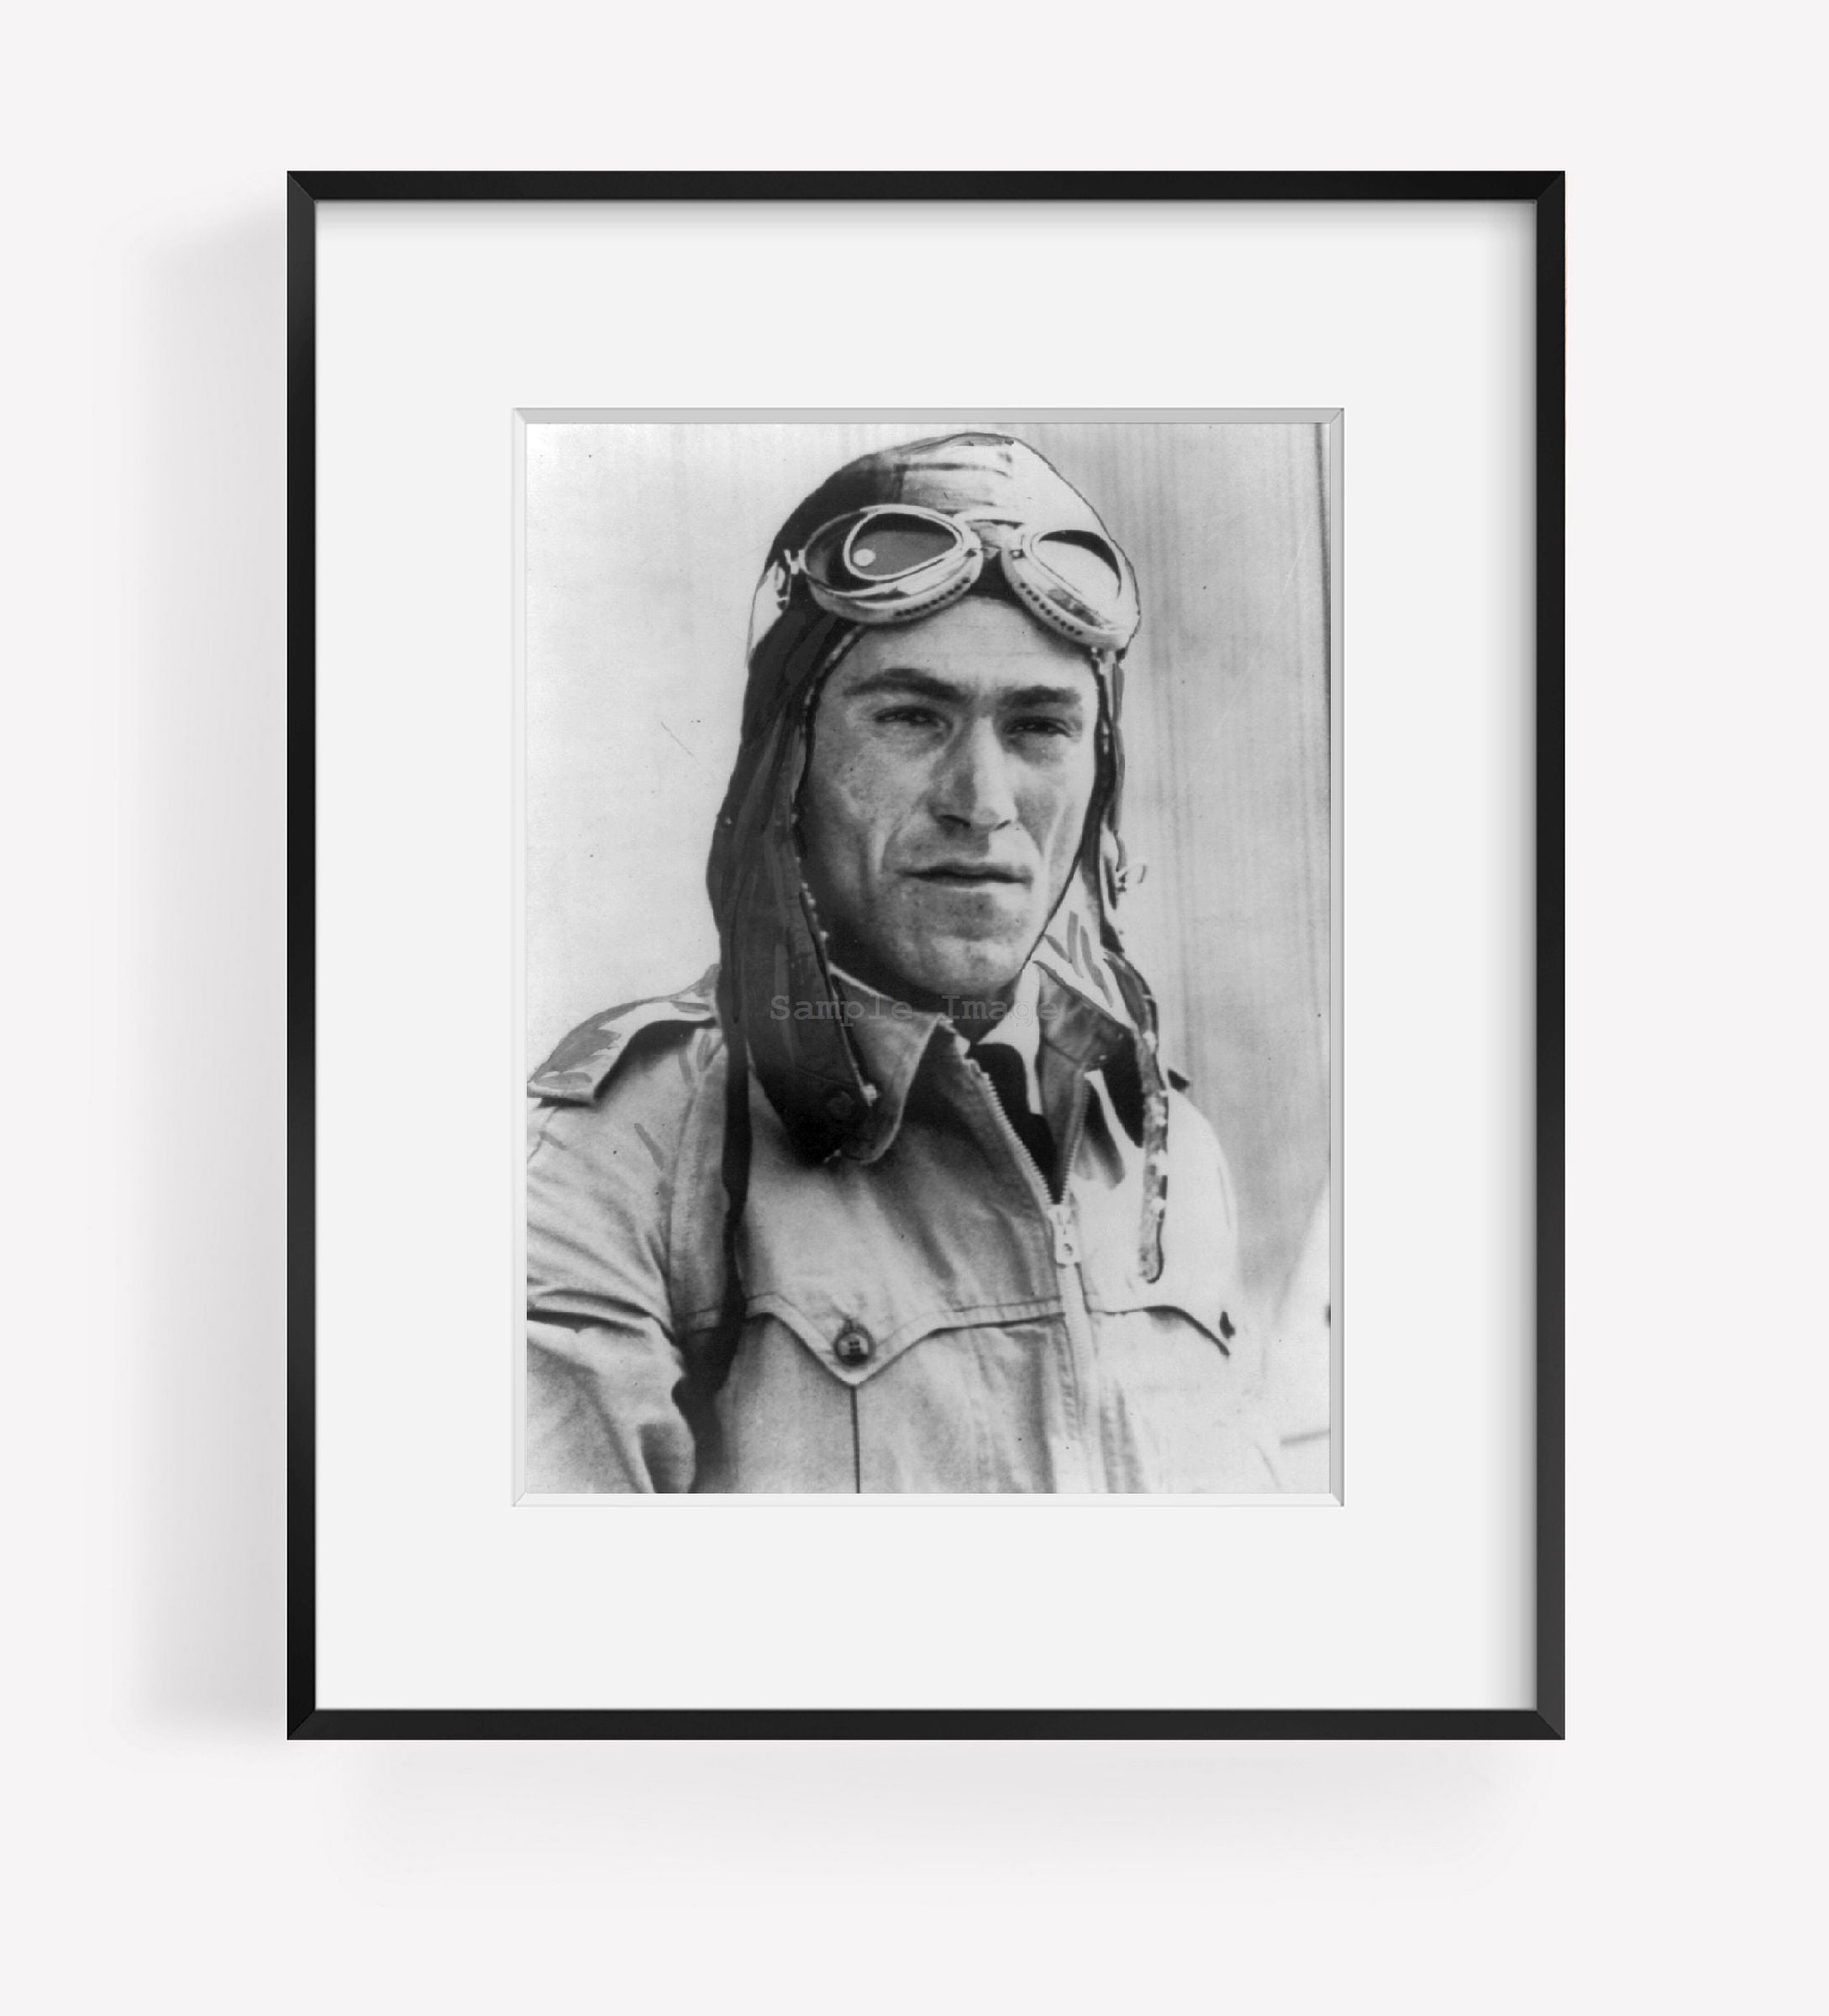 Photo: Francesco Agello, 1902-1942, Italian test pilot, in aviator's suit